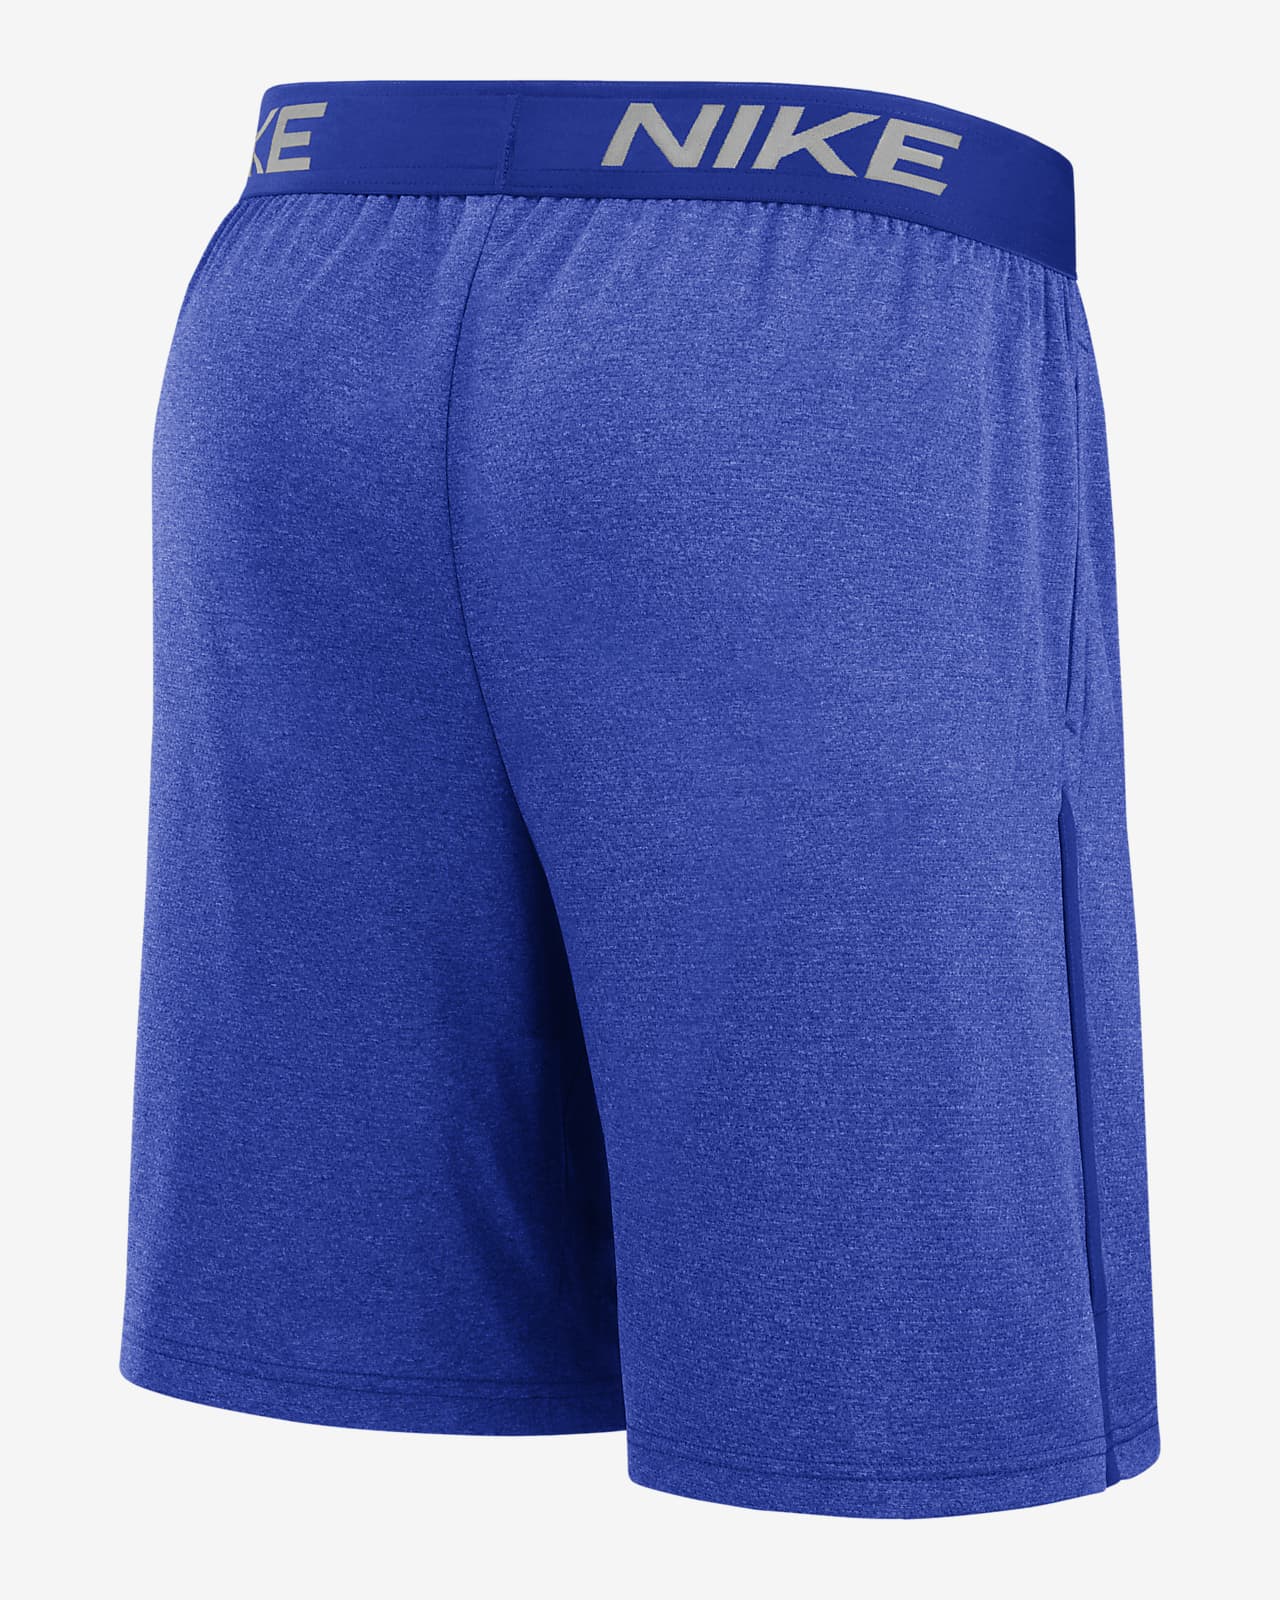 Nike Dri-FIT Primetime Logo (MLB Atlanta Braves) Men's Shorts